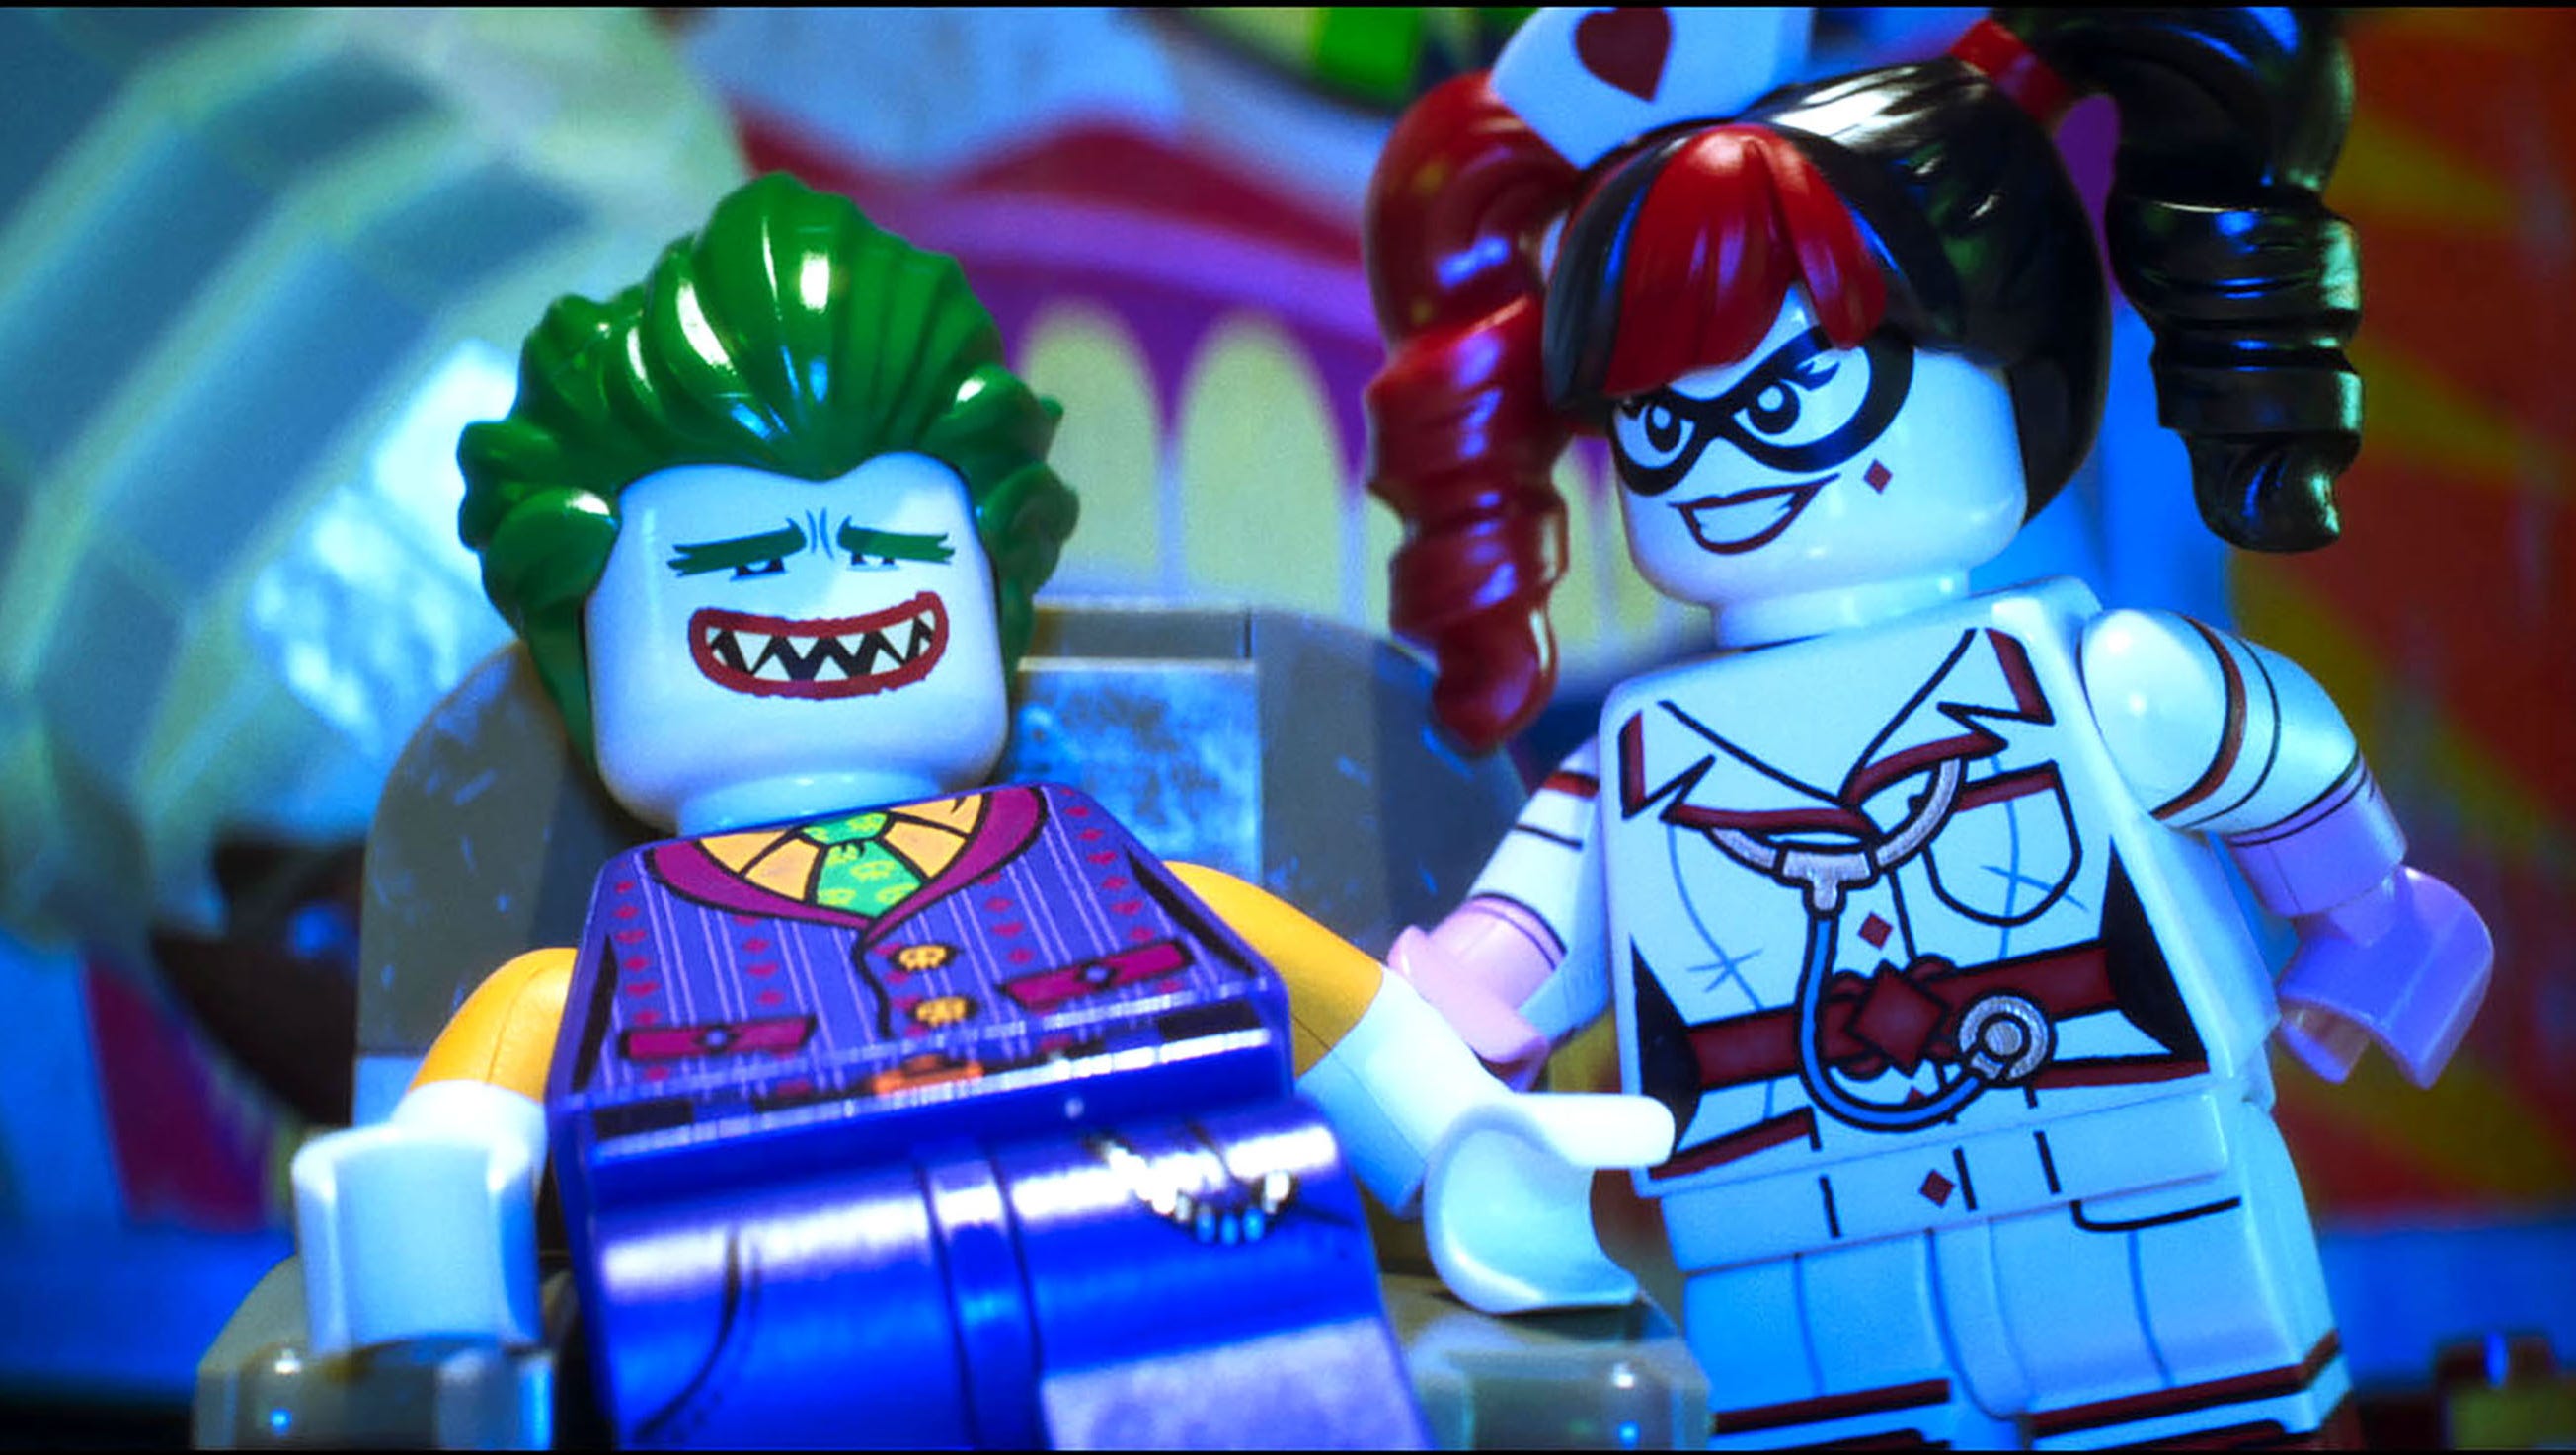 All your favorite villains (hello, Harley!) get the 'Lego Batman' treatment